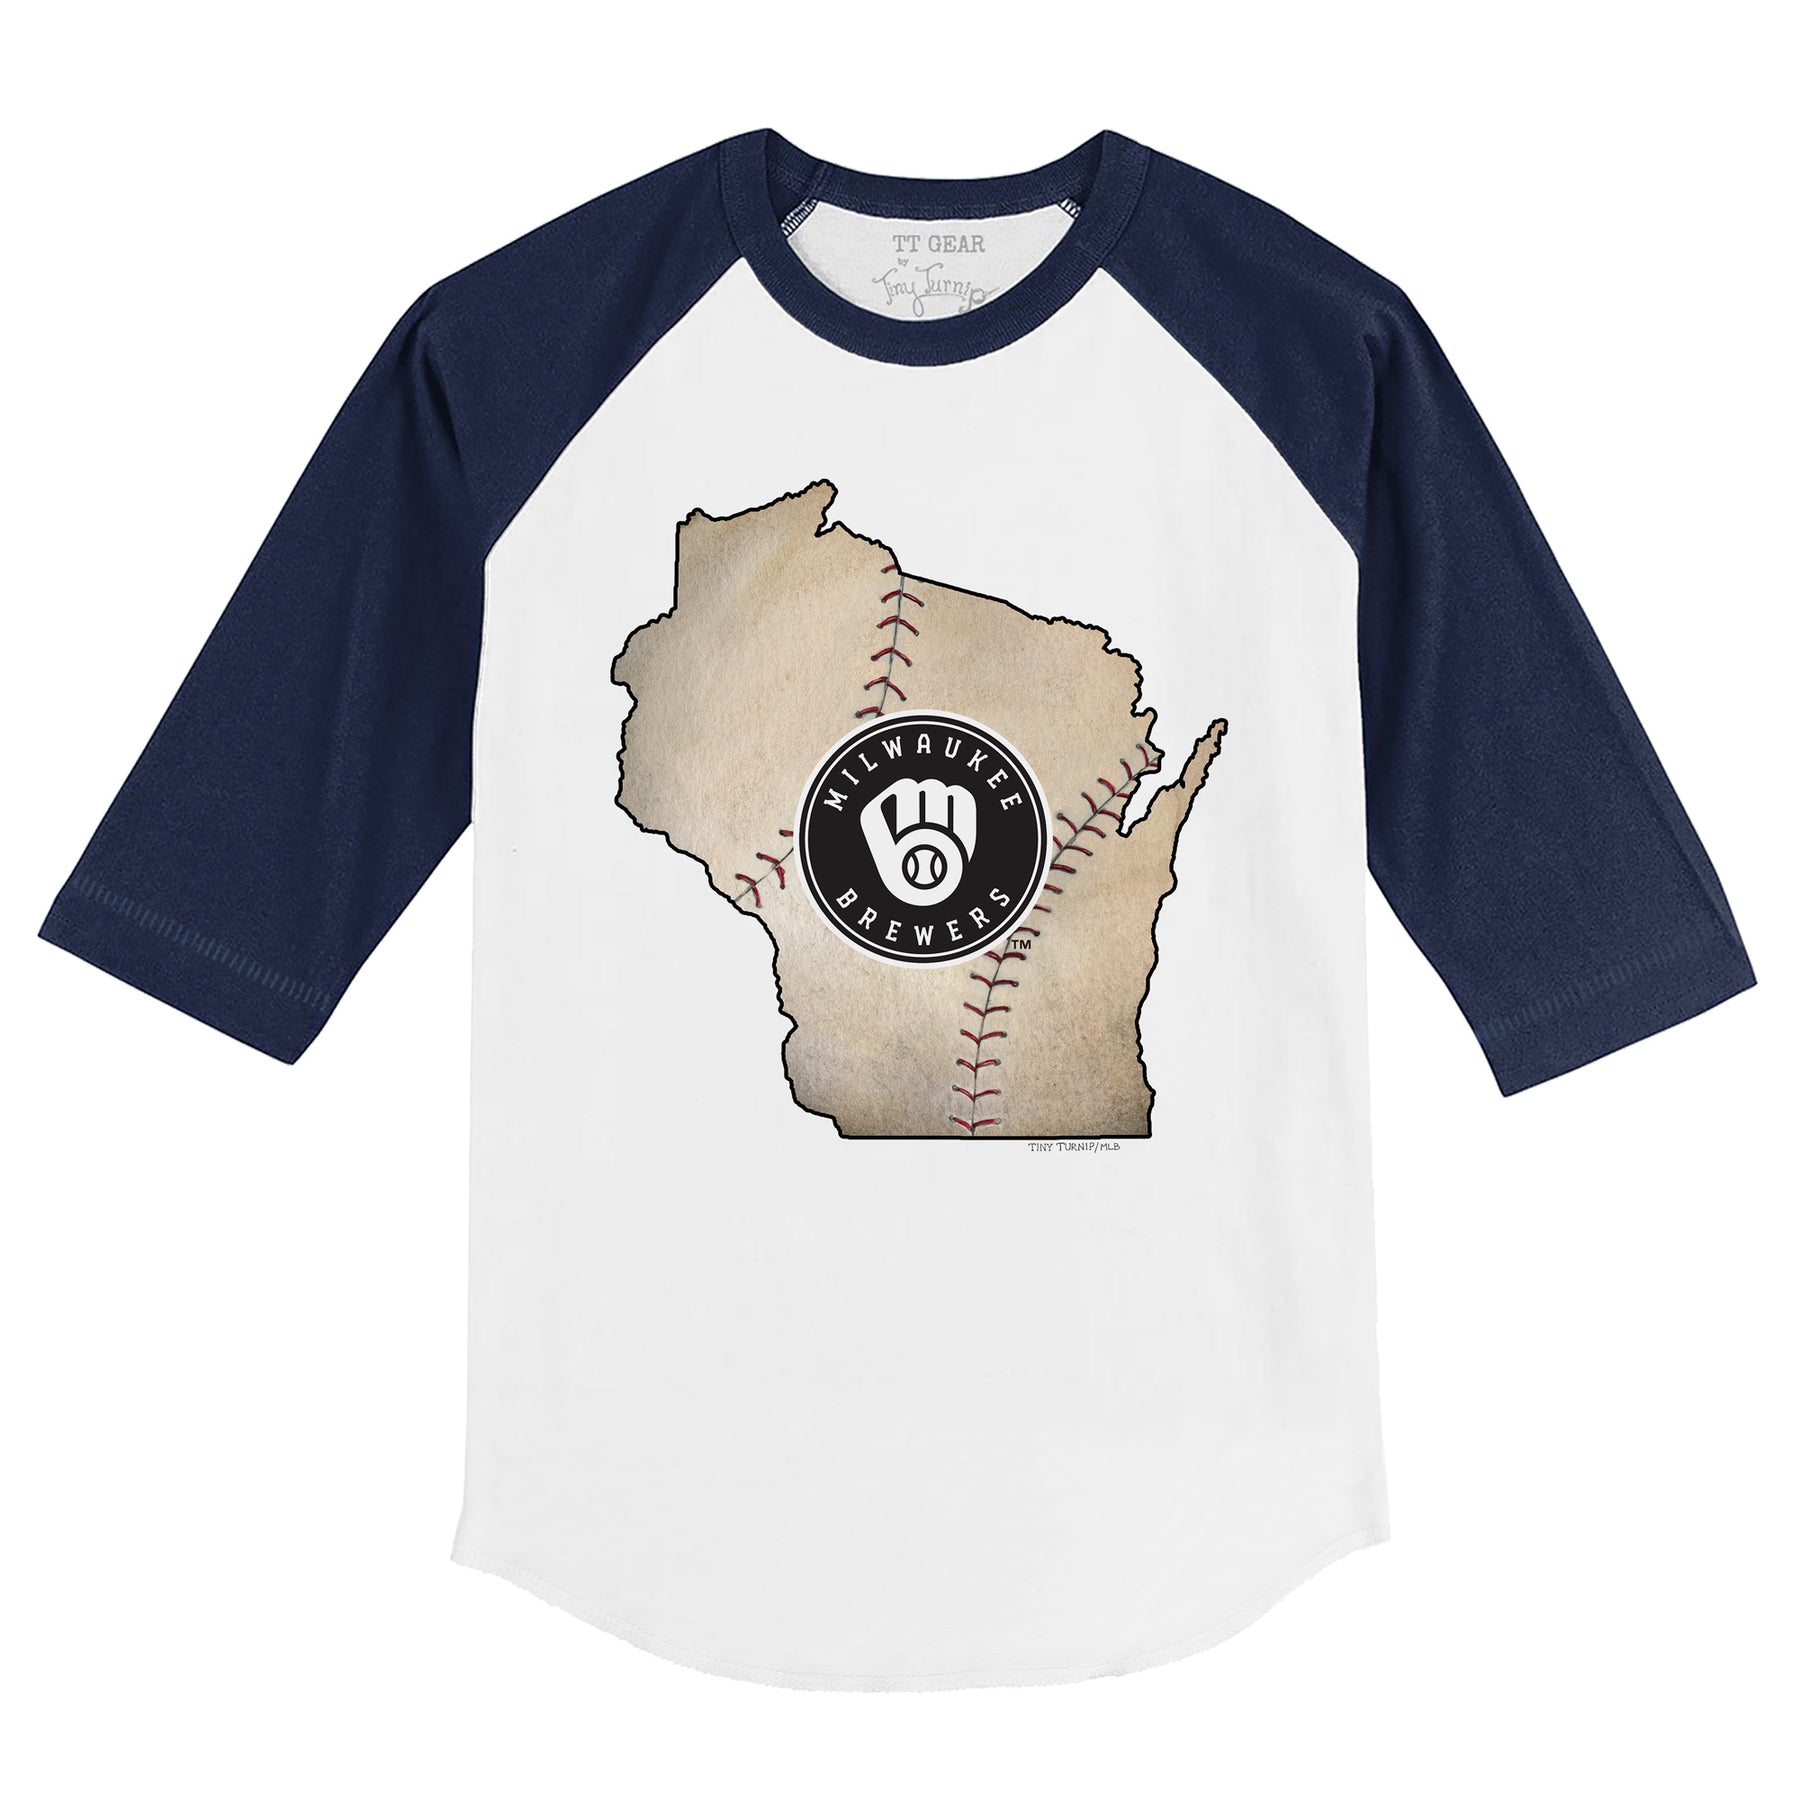 MLB Team Apparel Toddler Milwaukee Brewers Navy 2-Piece Set